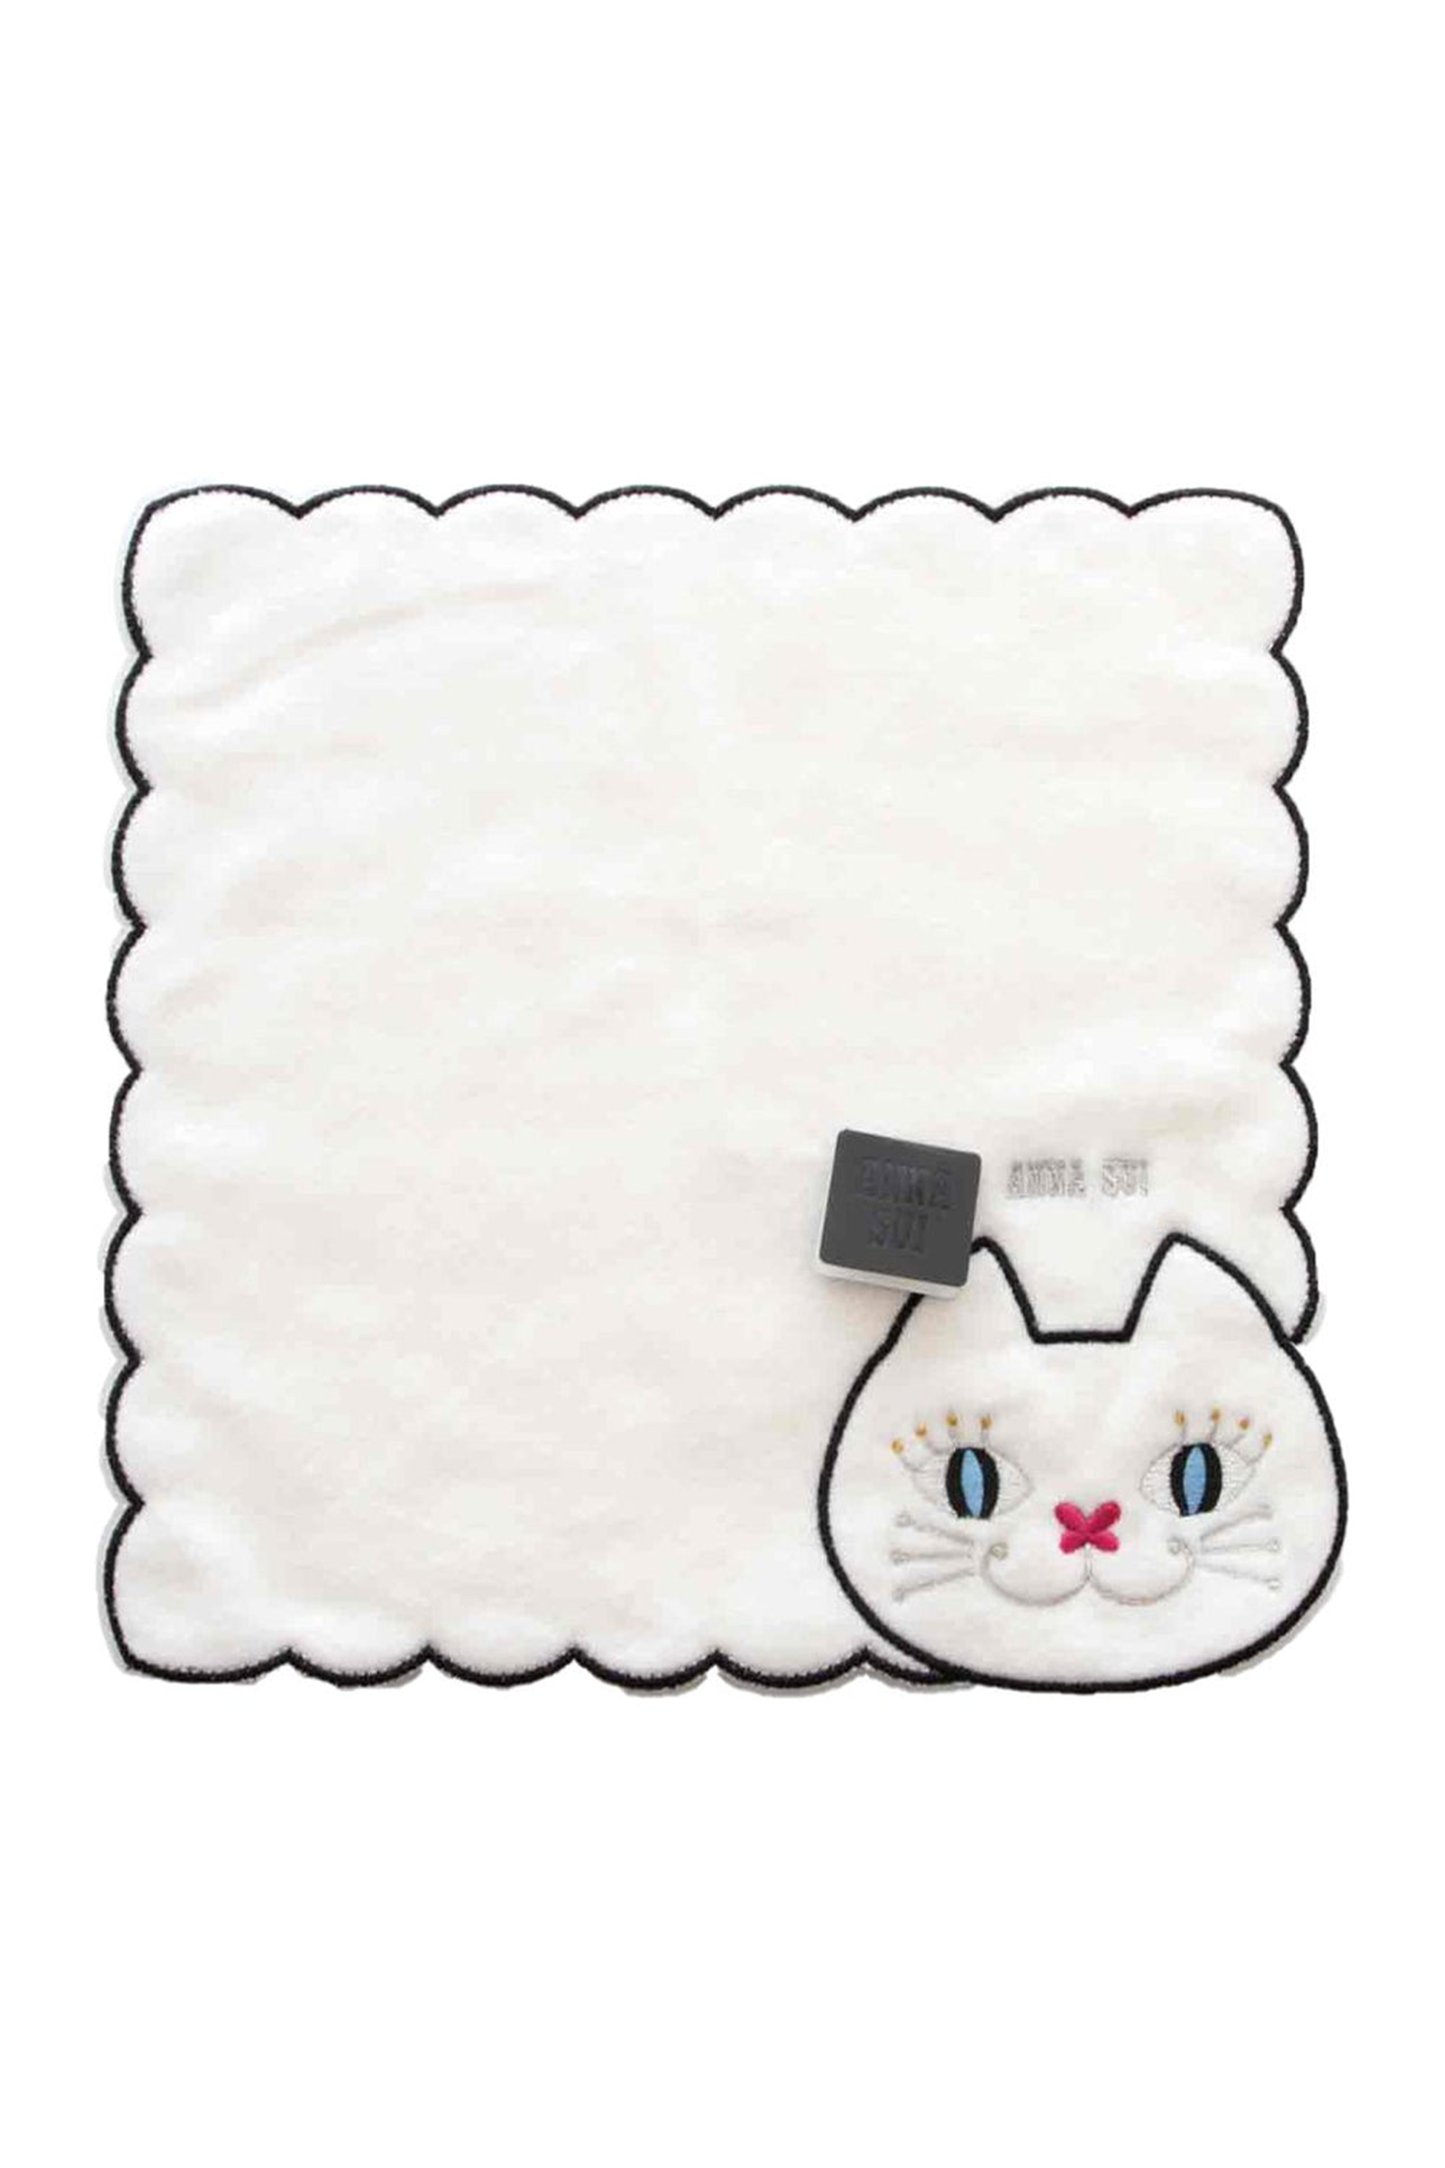 White Washcloth squared, wavy hems, white cat black borders, blue eyes, pink nose, Anna Sui label